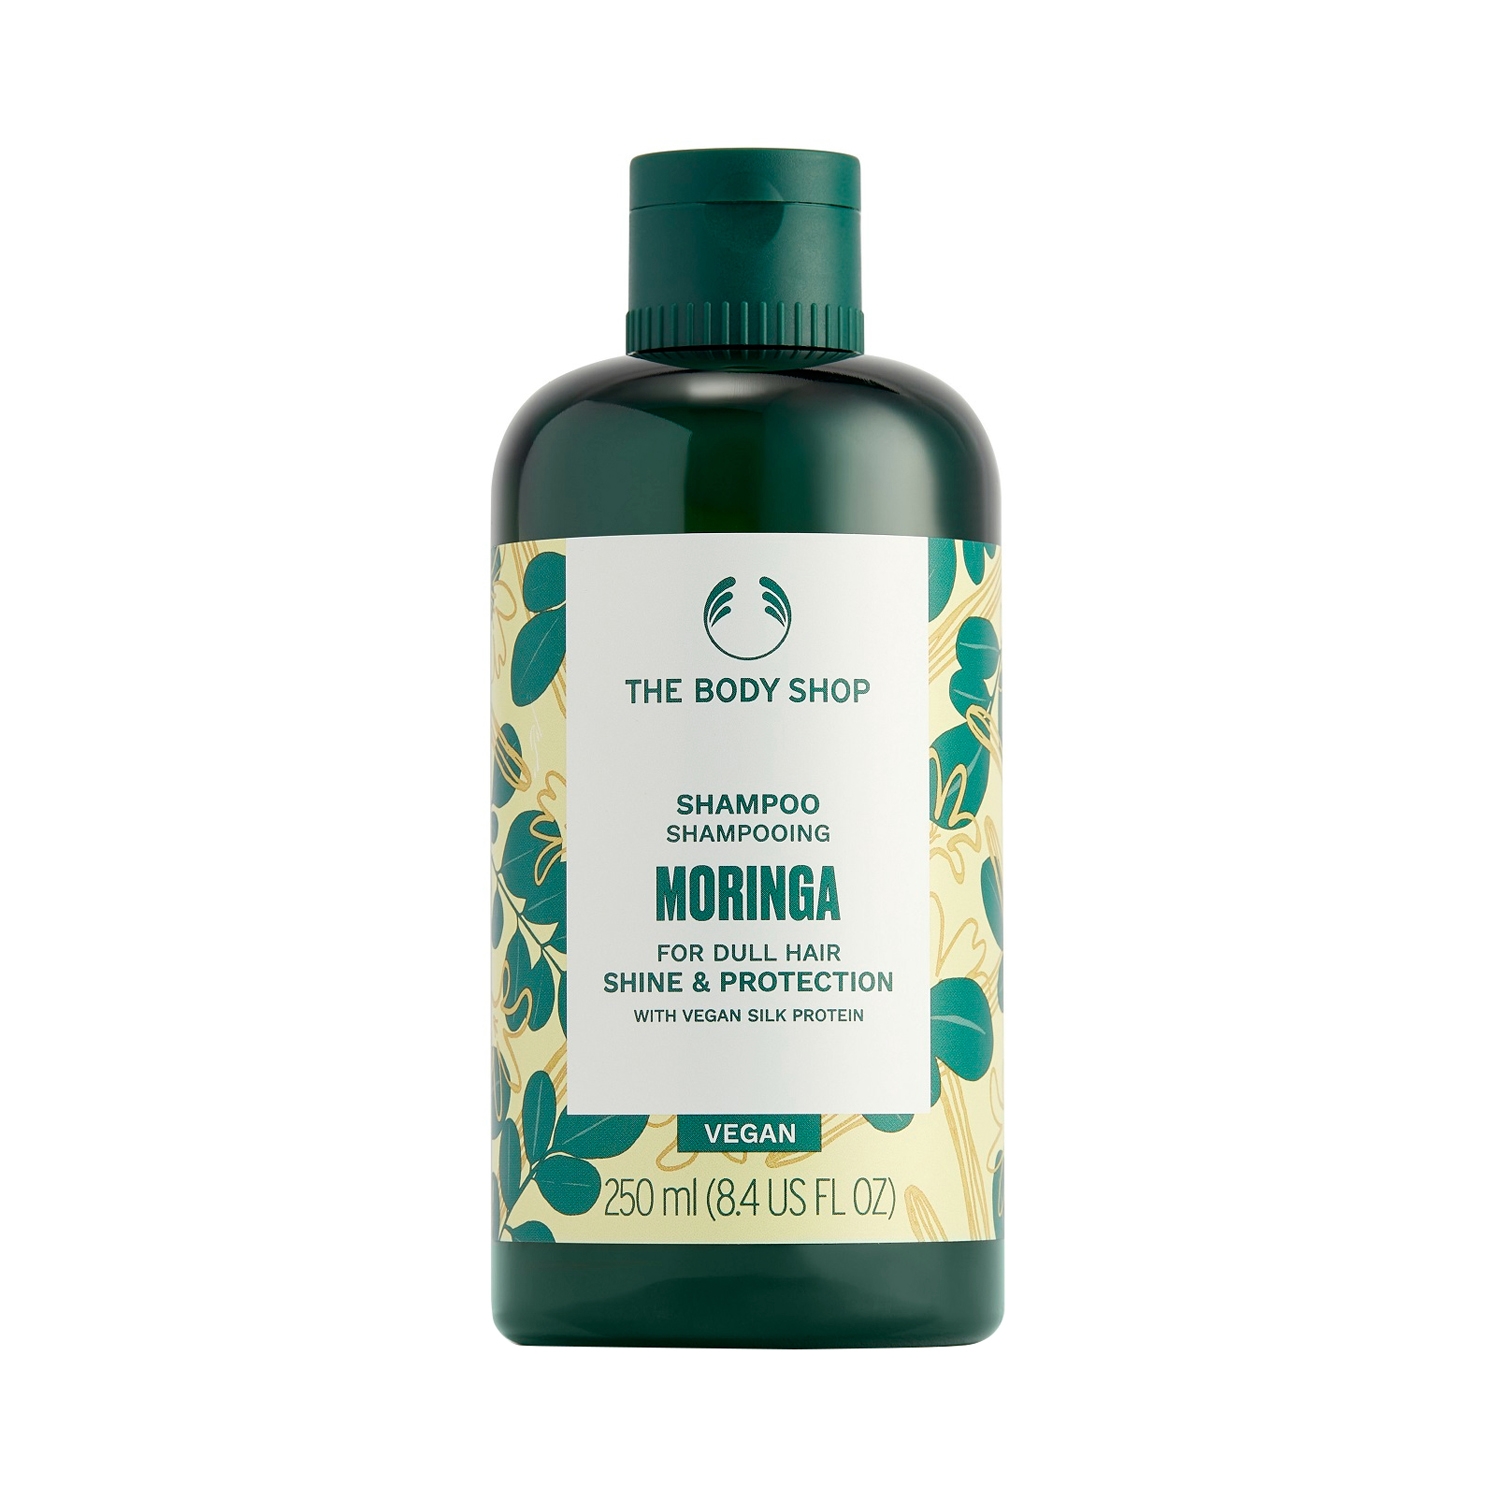 The Body Shop | The Body Shop Moringa Shine & Protection Shampoo (250ml)